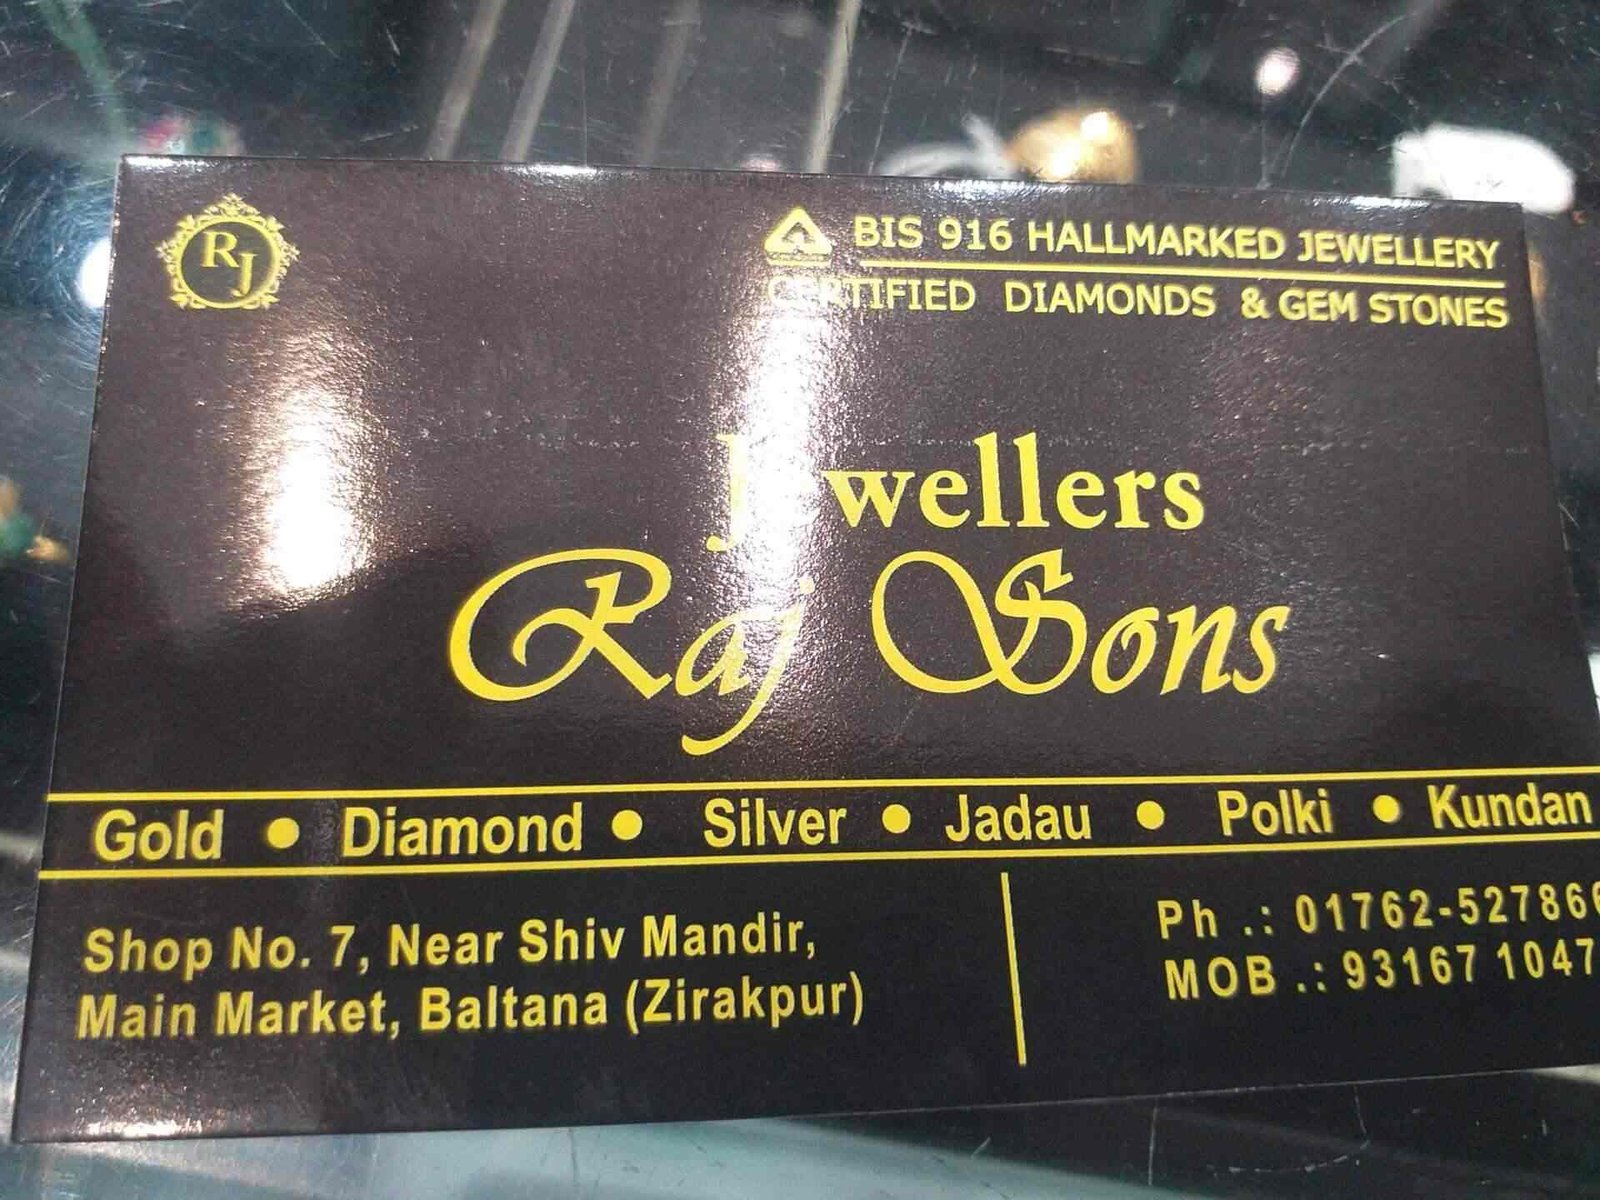 Jewellers Raj Sons